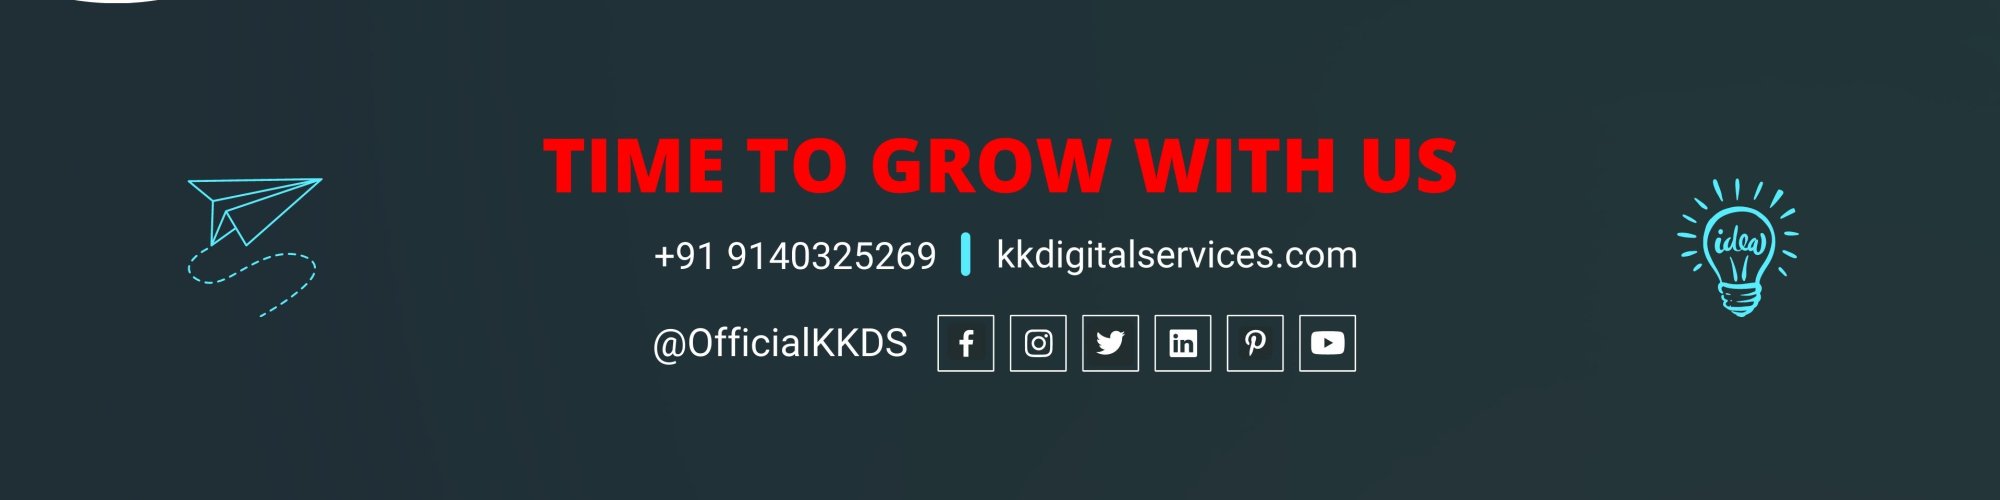 KK Digital Services